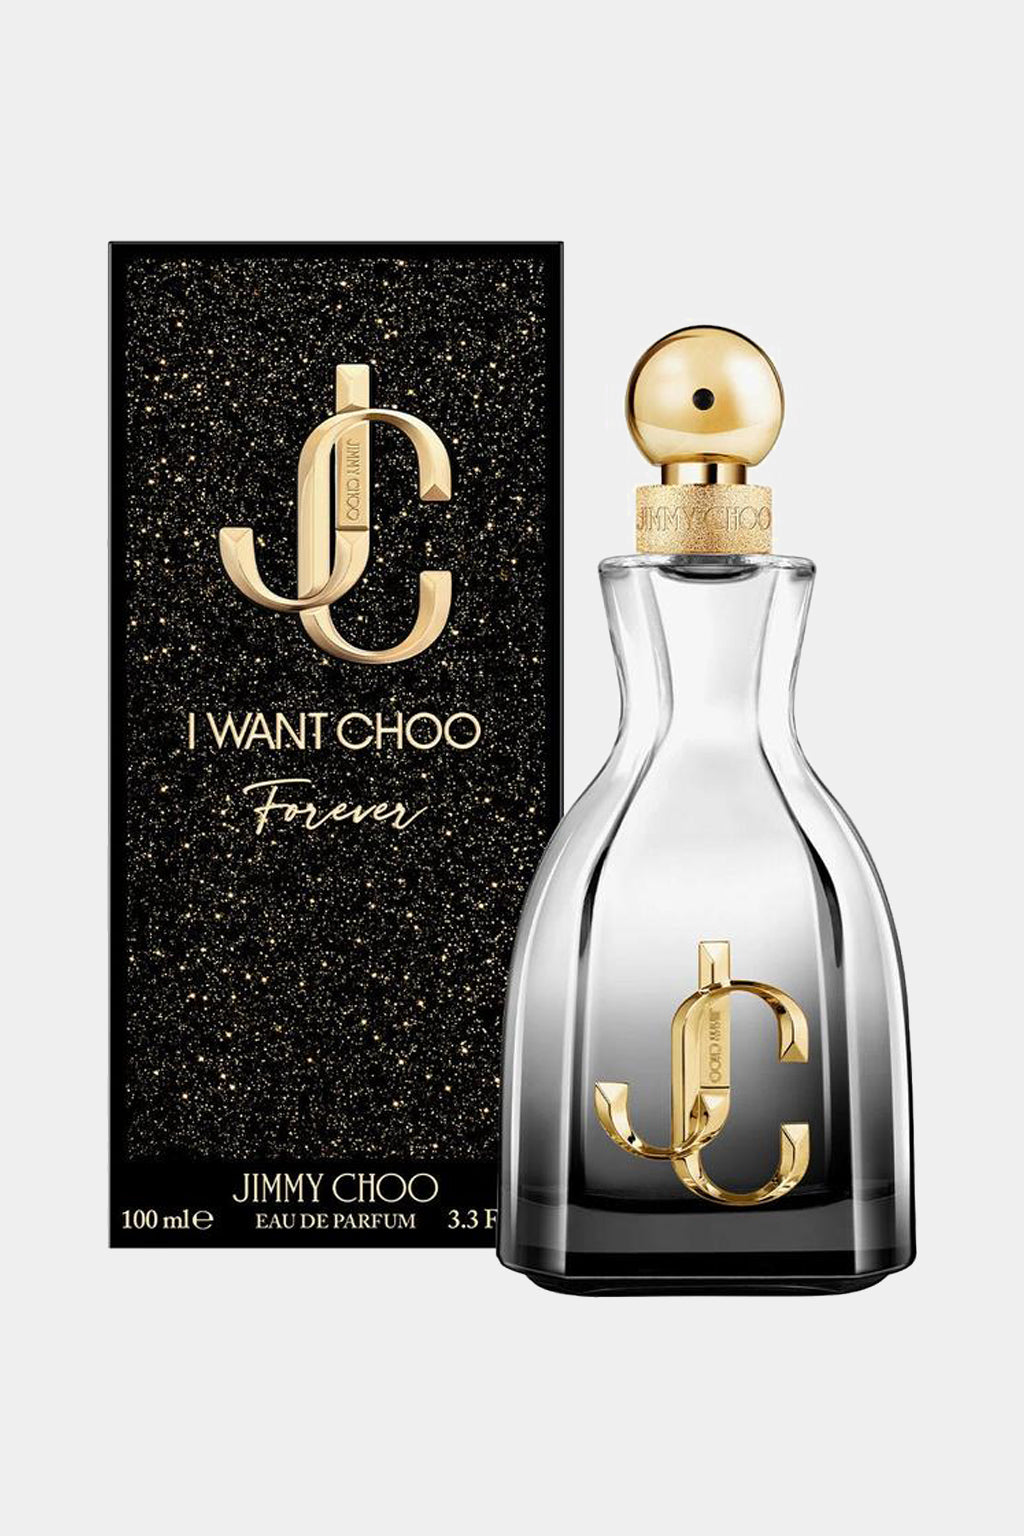 Jimmy Choo - I Want Choo Forever Eau de Parfum